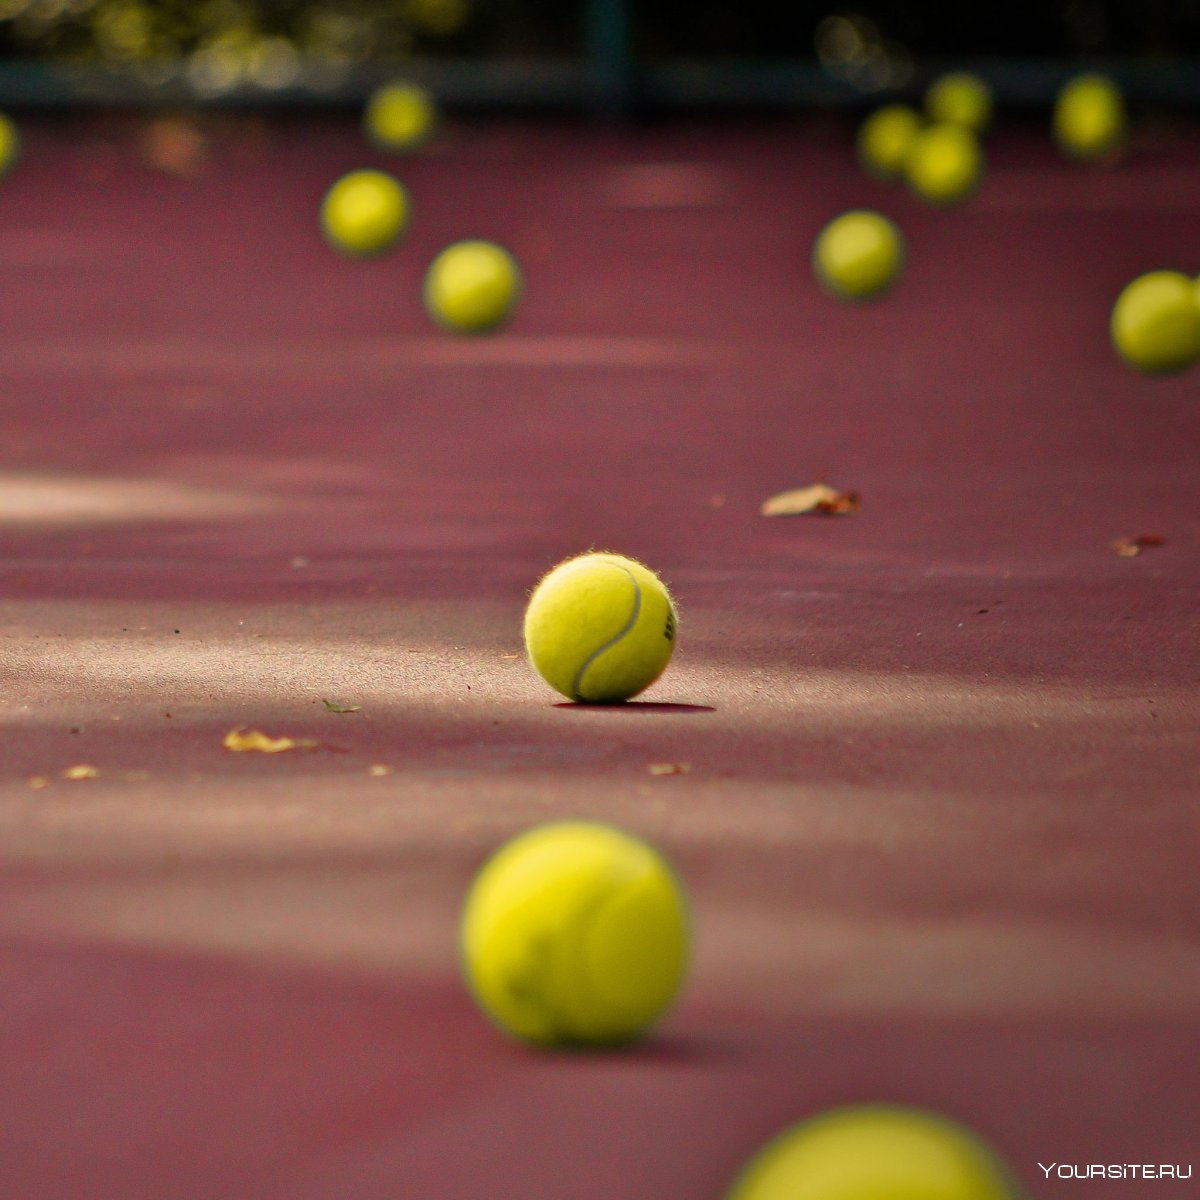 Теннисный мяч на корте